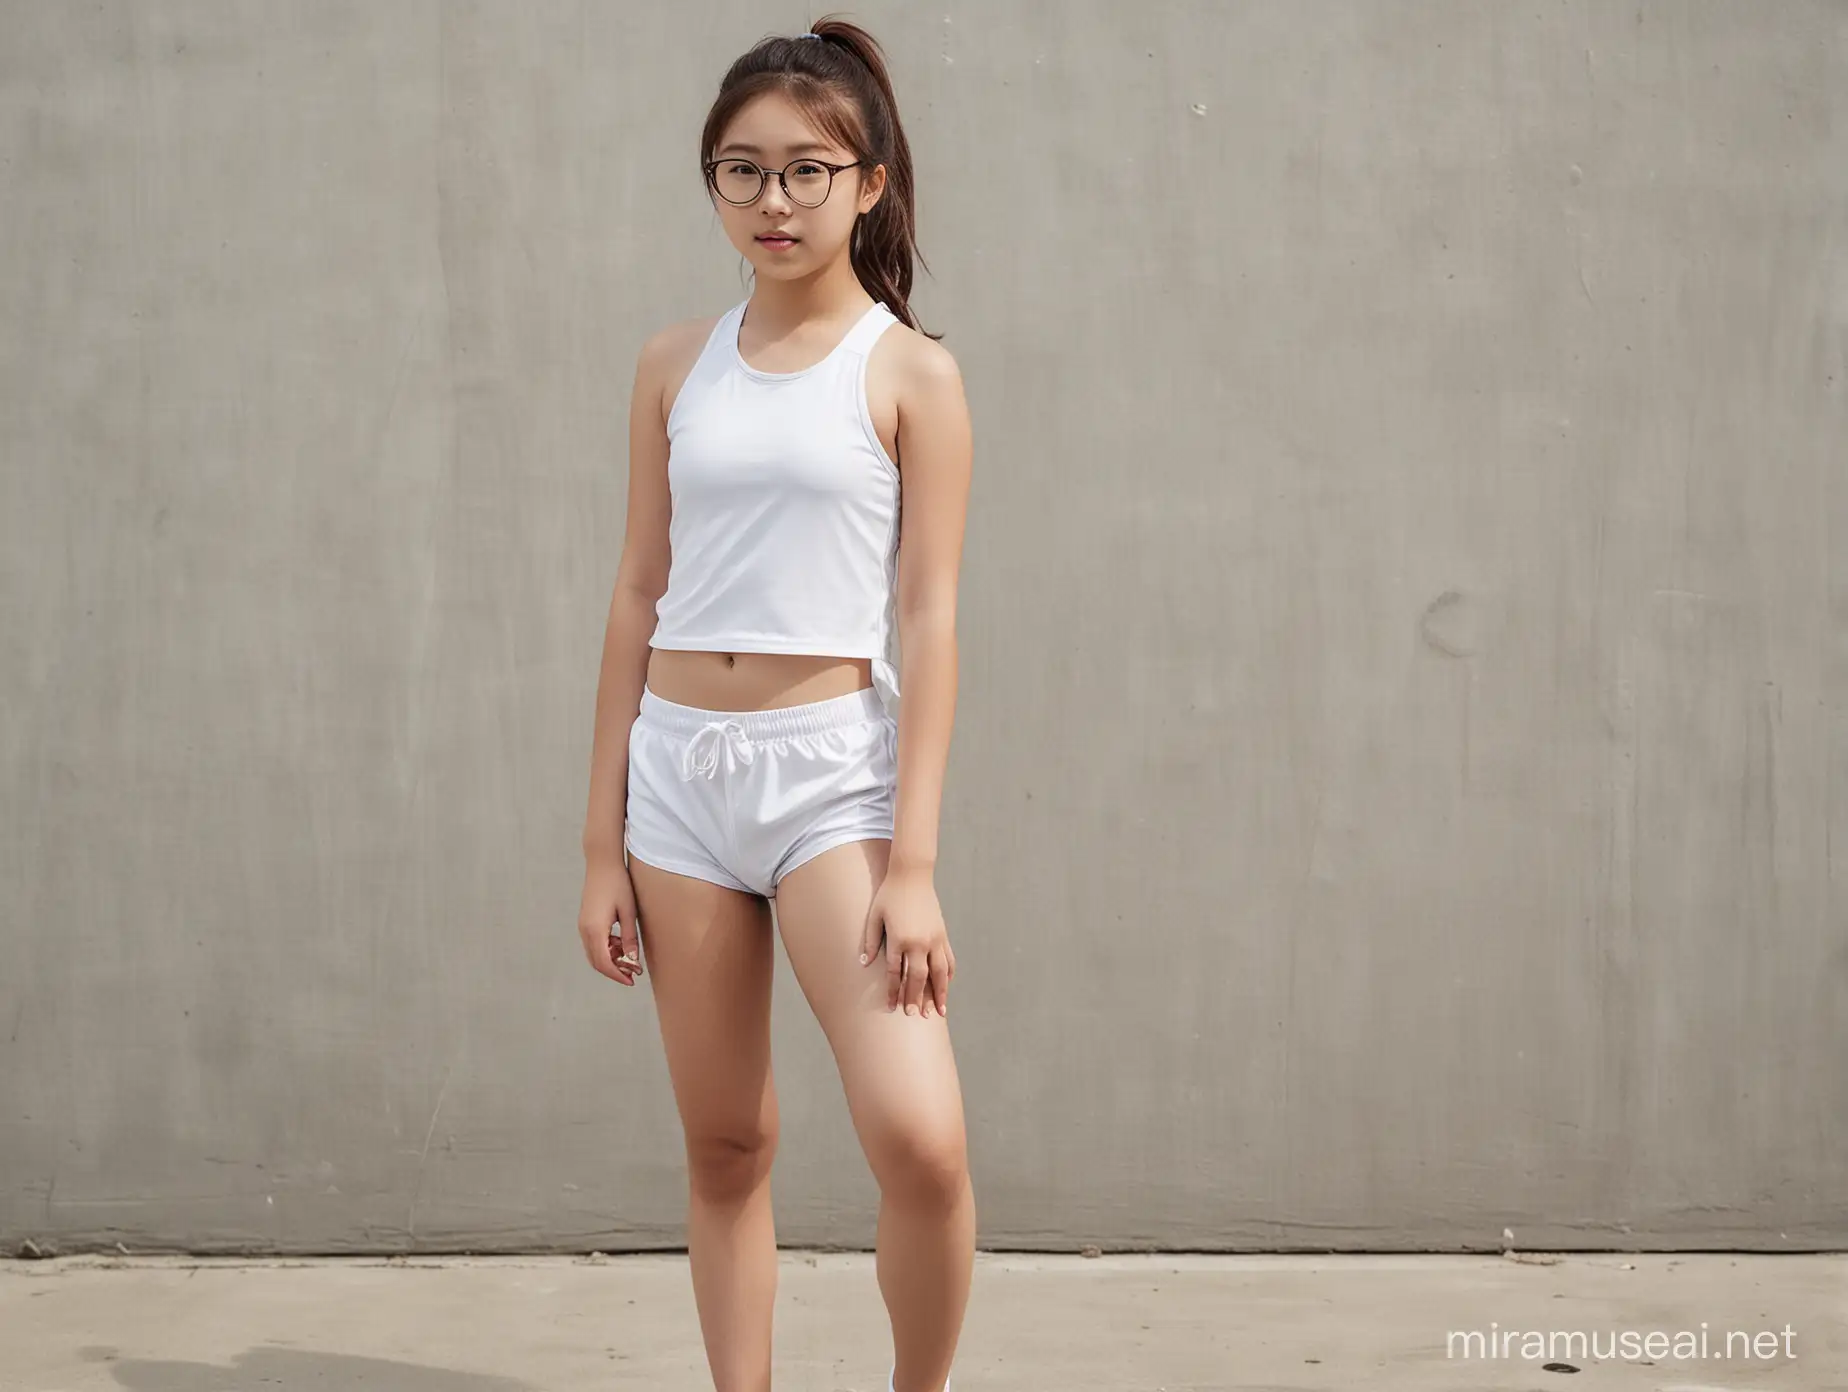 Korean Preteen Girls in Stylish Swimwear and Sneakers